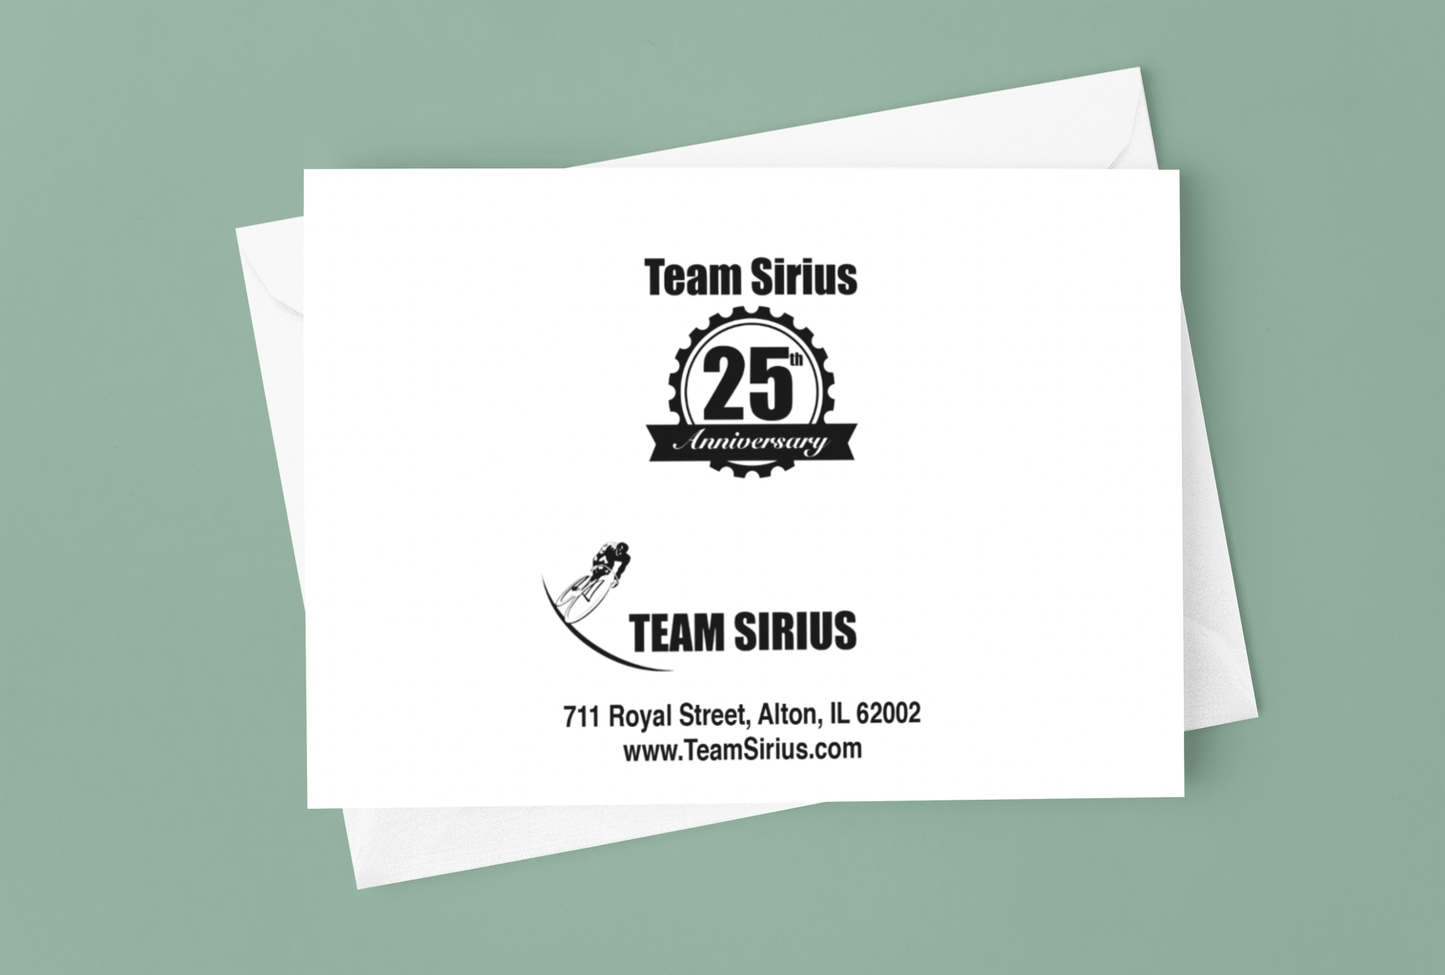 Team Sirius Thank You Cards